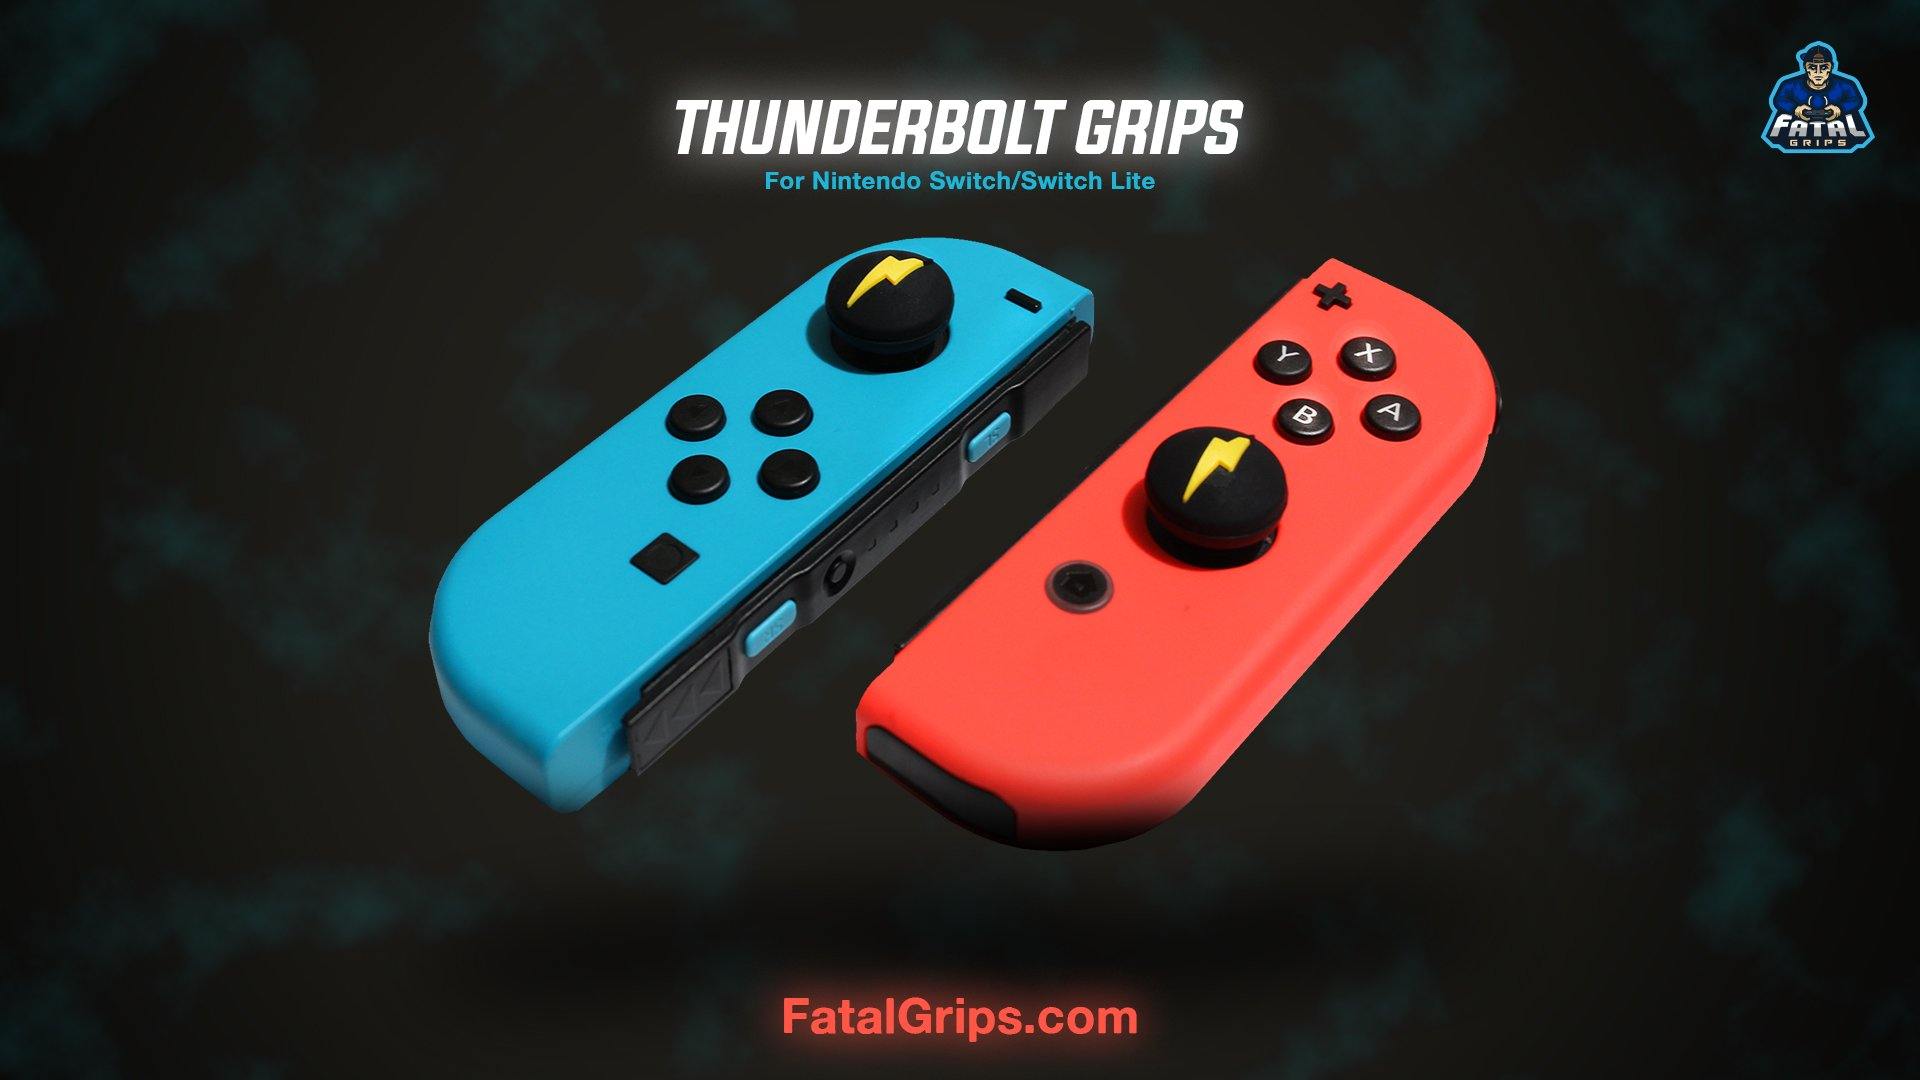 Thunderbolt Grips - Fatal Grips